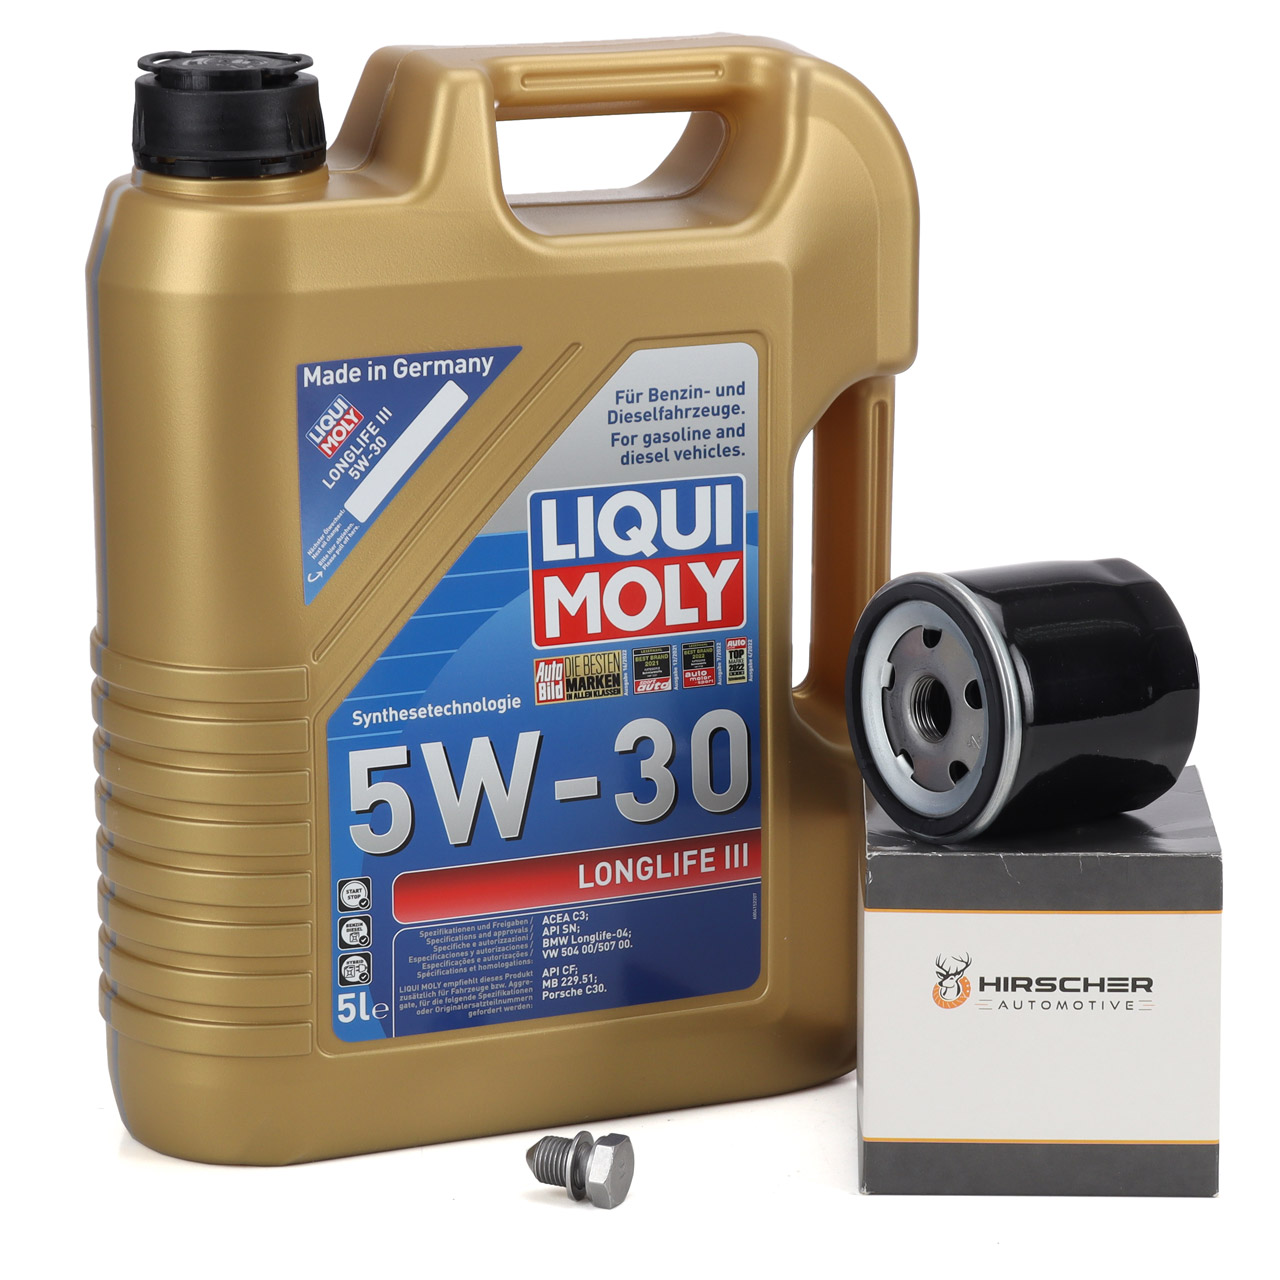 5L LIQUI MOLY 5W30 LONGLIFE III Motoröl + HIRSCHER Ölfilter VW